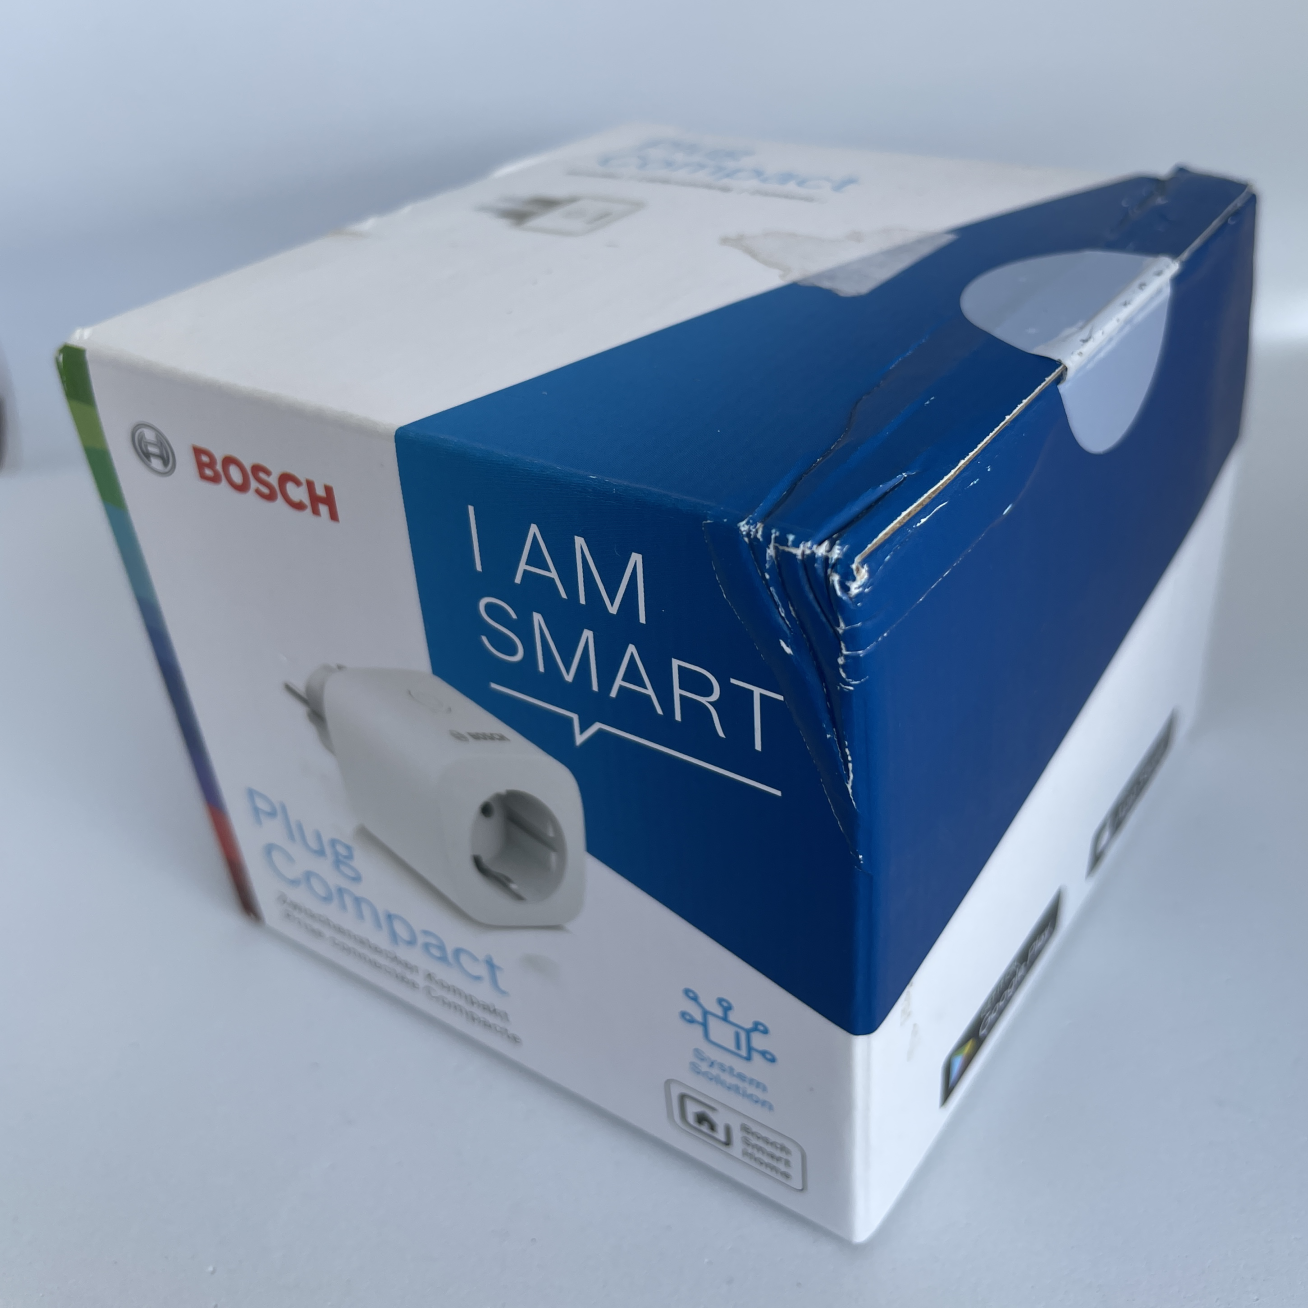 Bosch Smart Home Zwischenstecker kompakt - VERPACKUNG BESCHÄDIGT